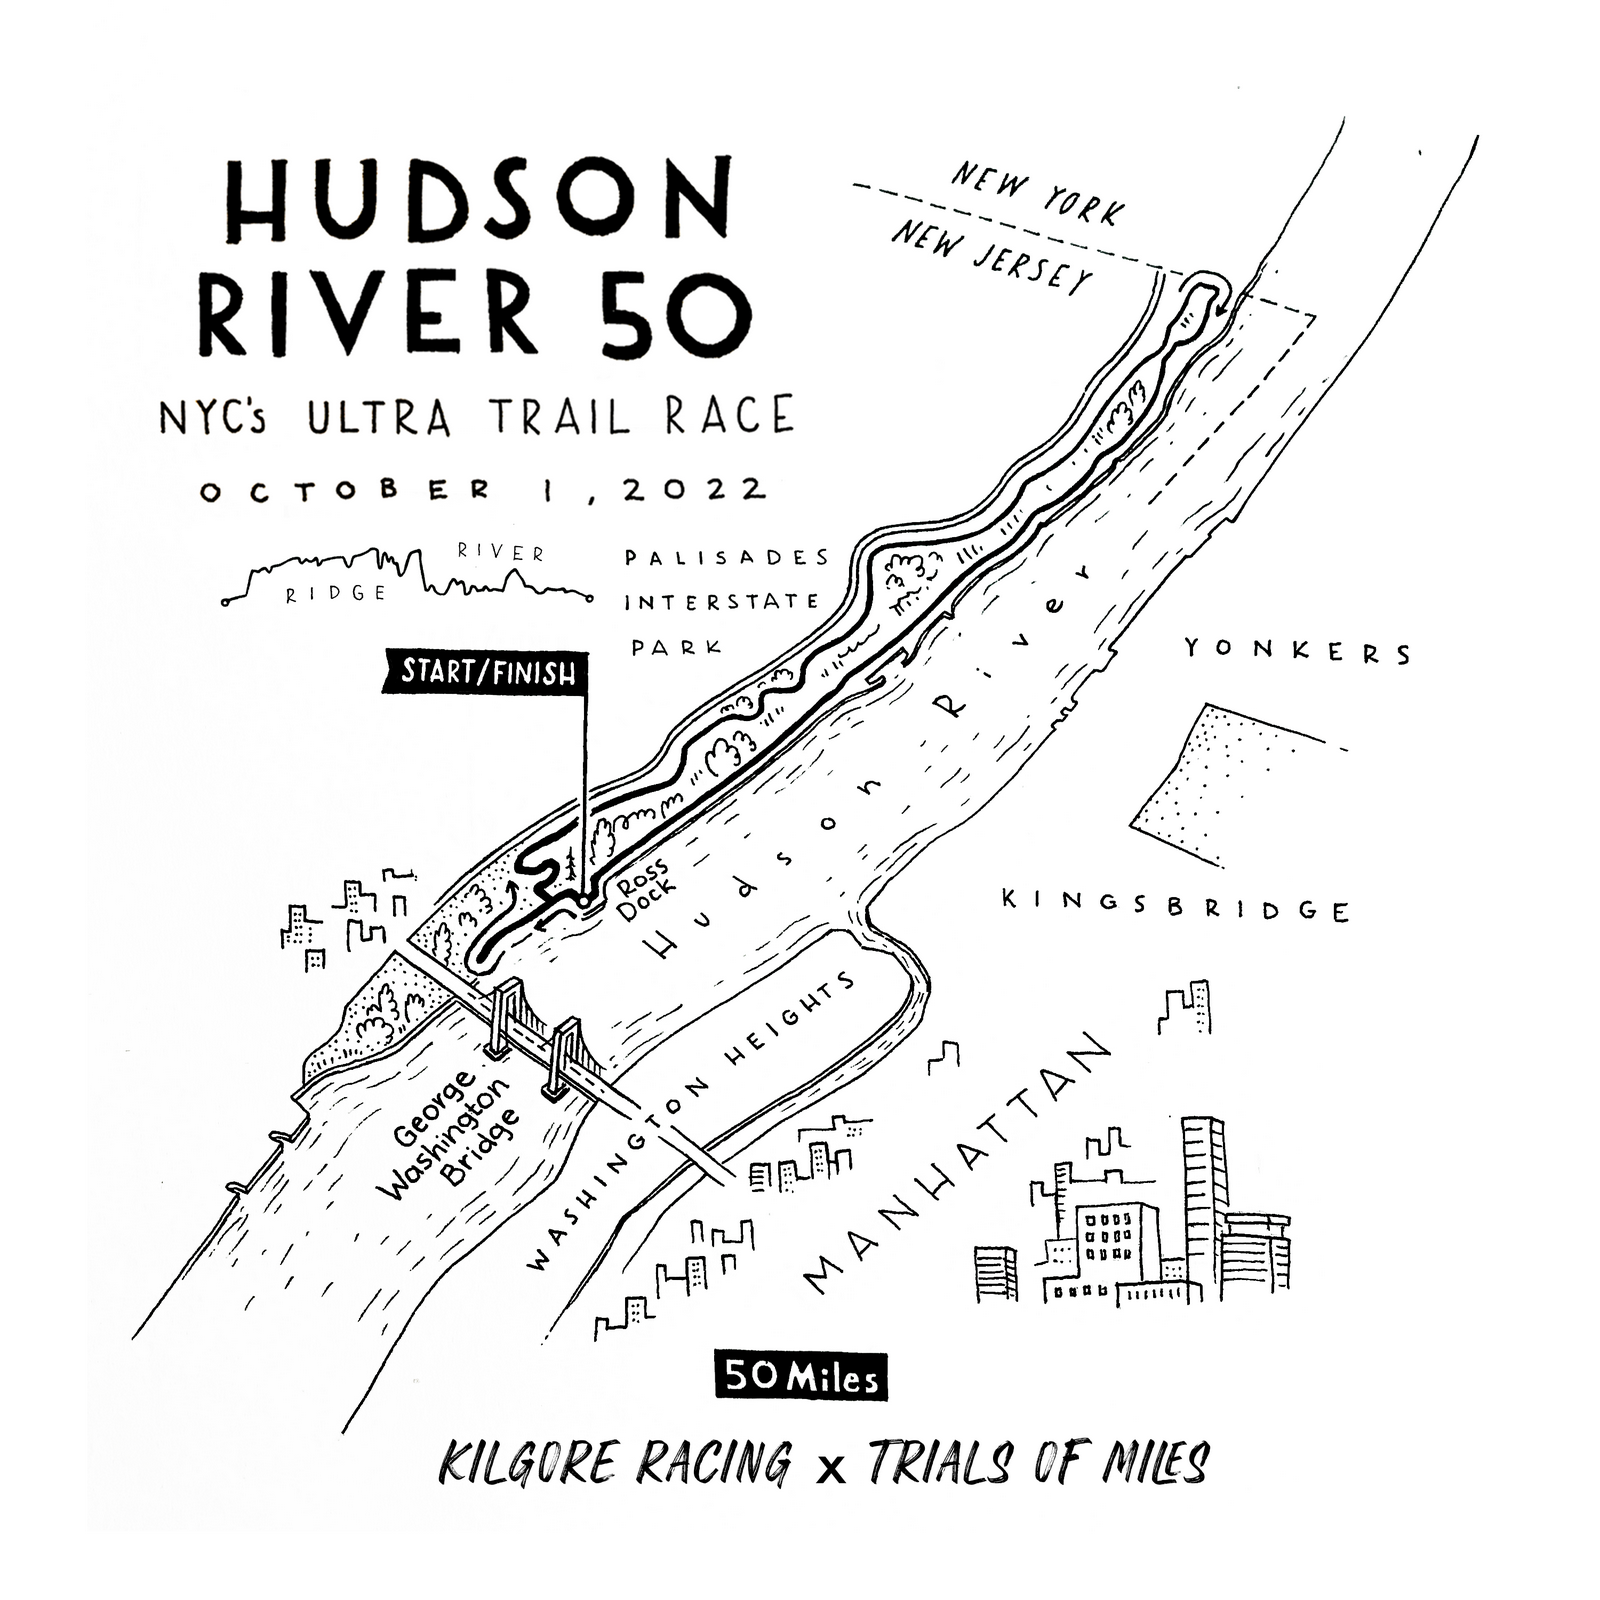 HUDSON RIVER 50